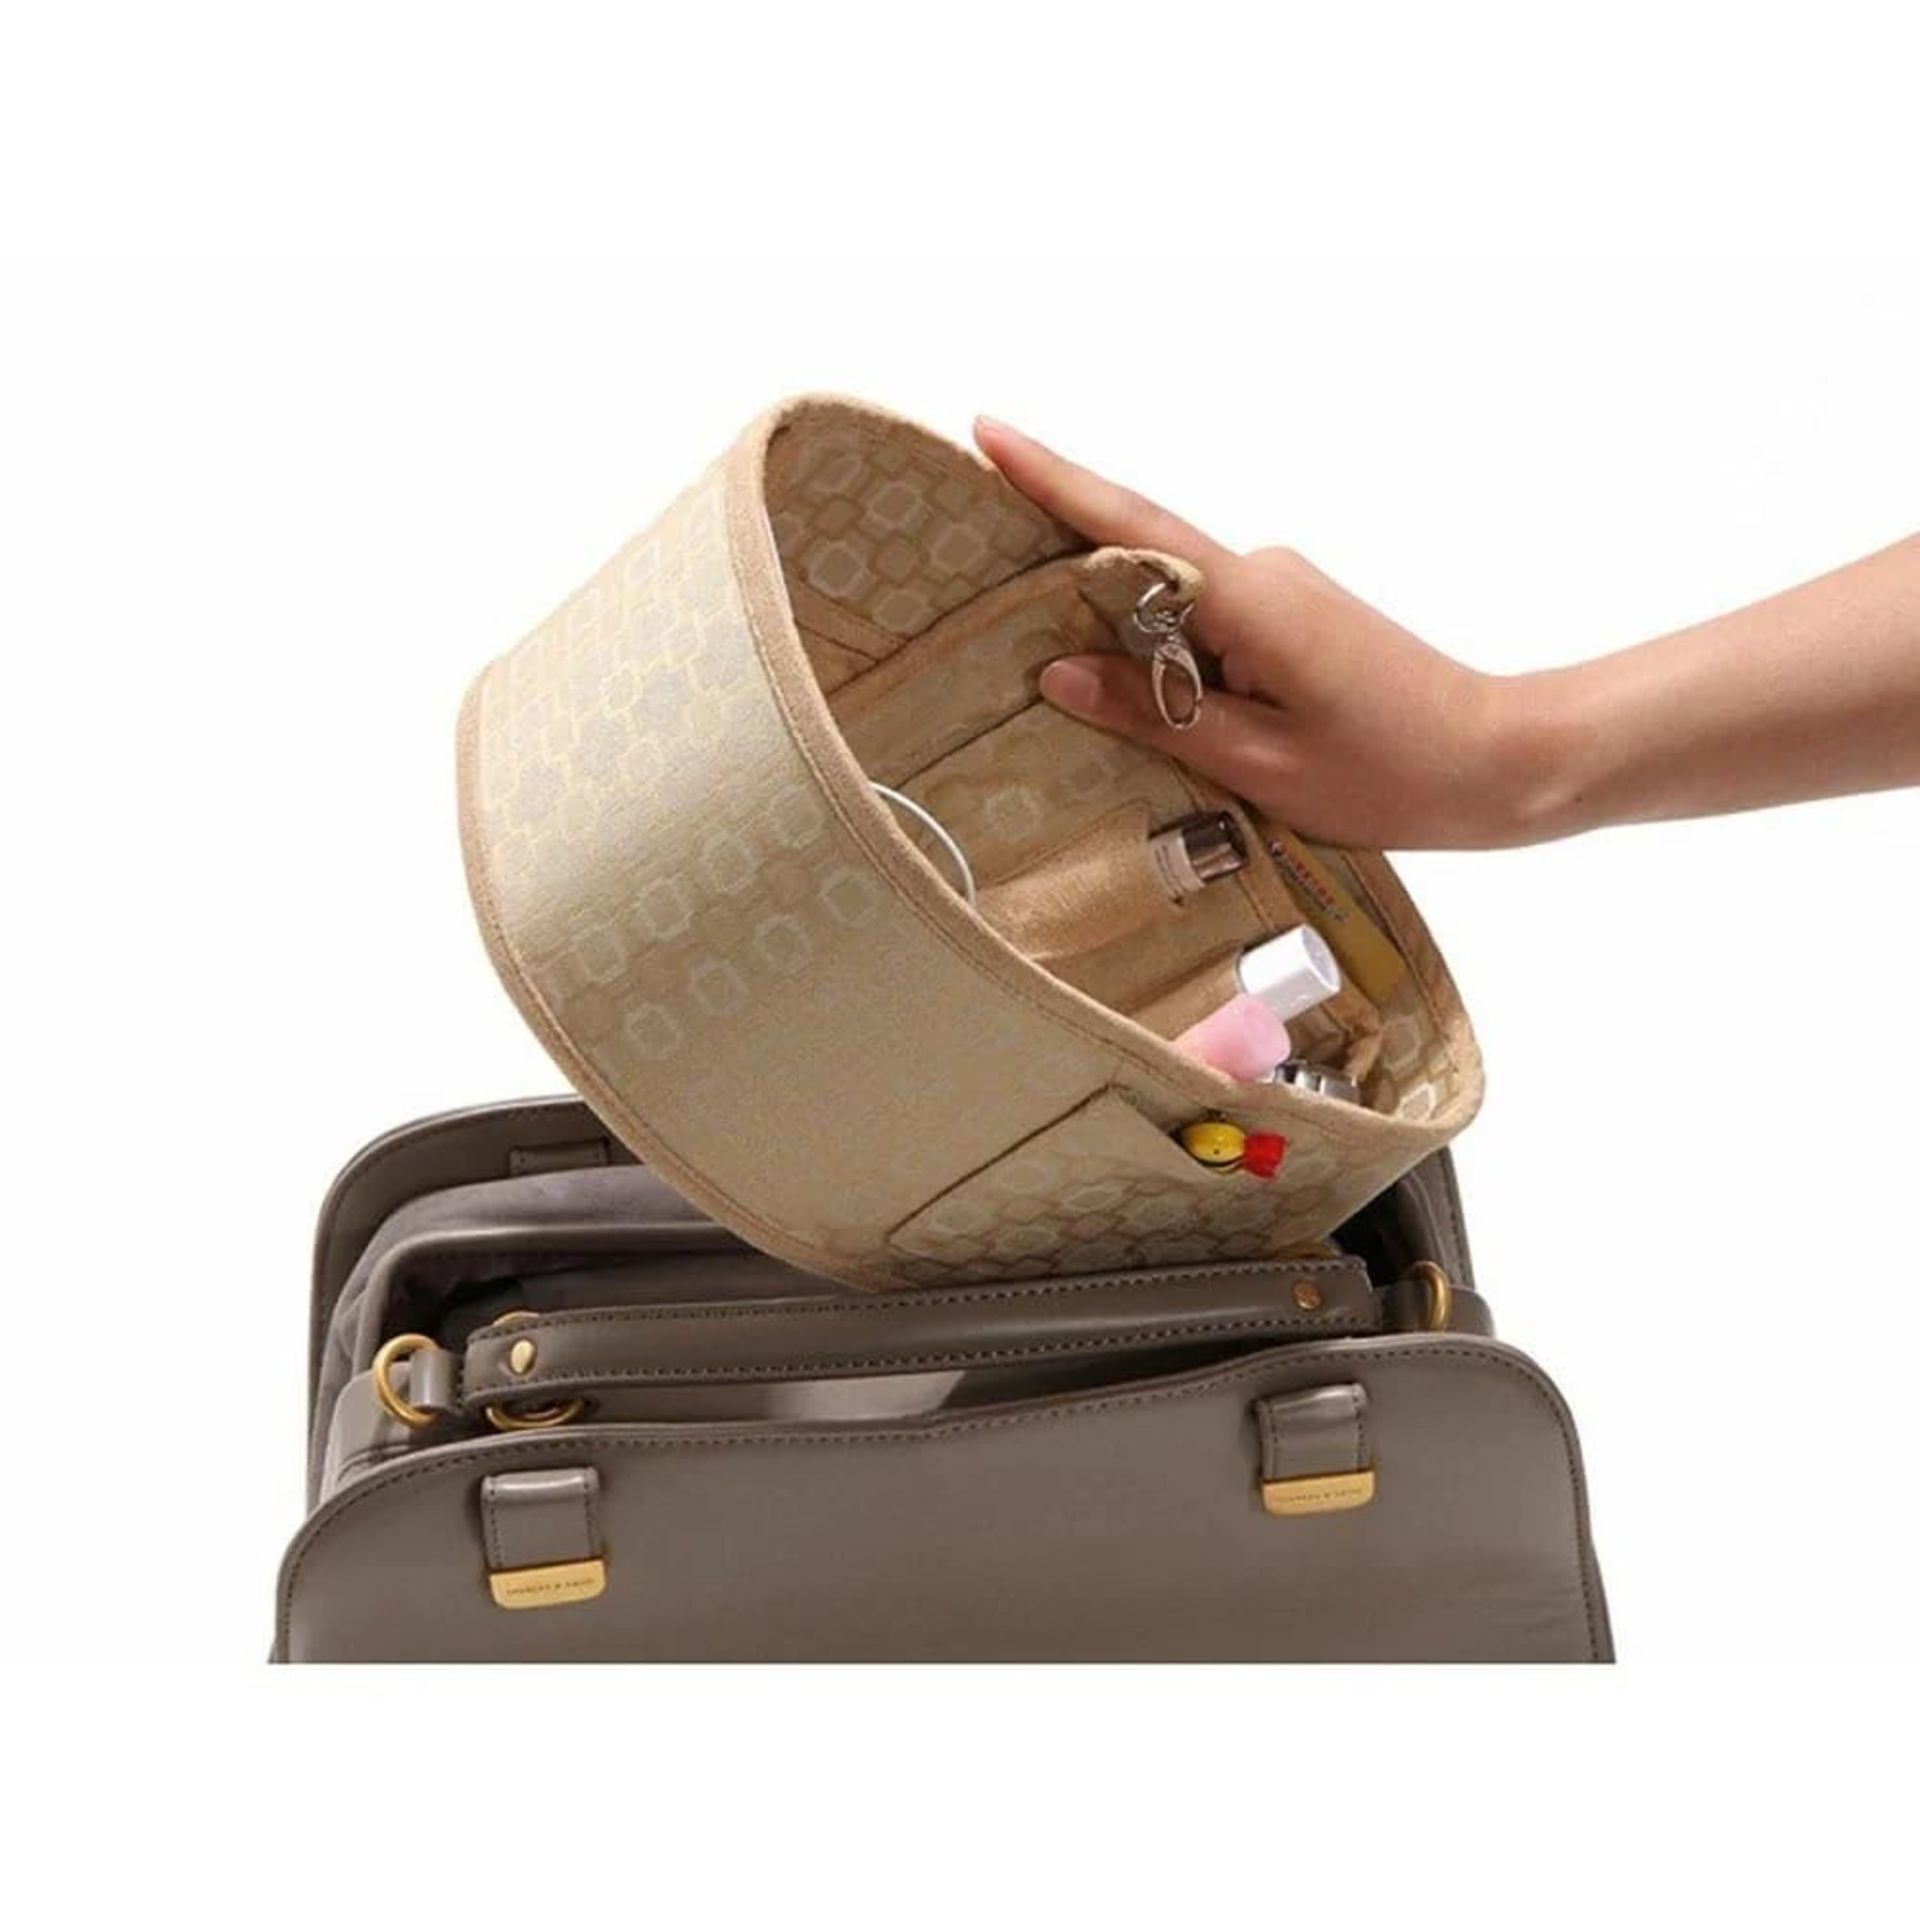 PURSE BRITE - Handbag Organiser with Light - New & Boxed - Image 4 of 7